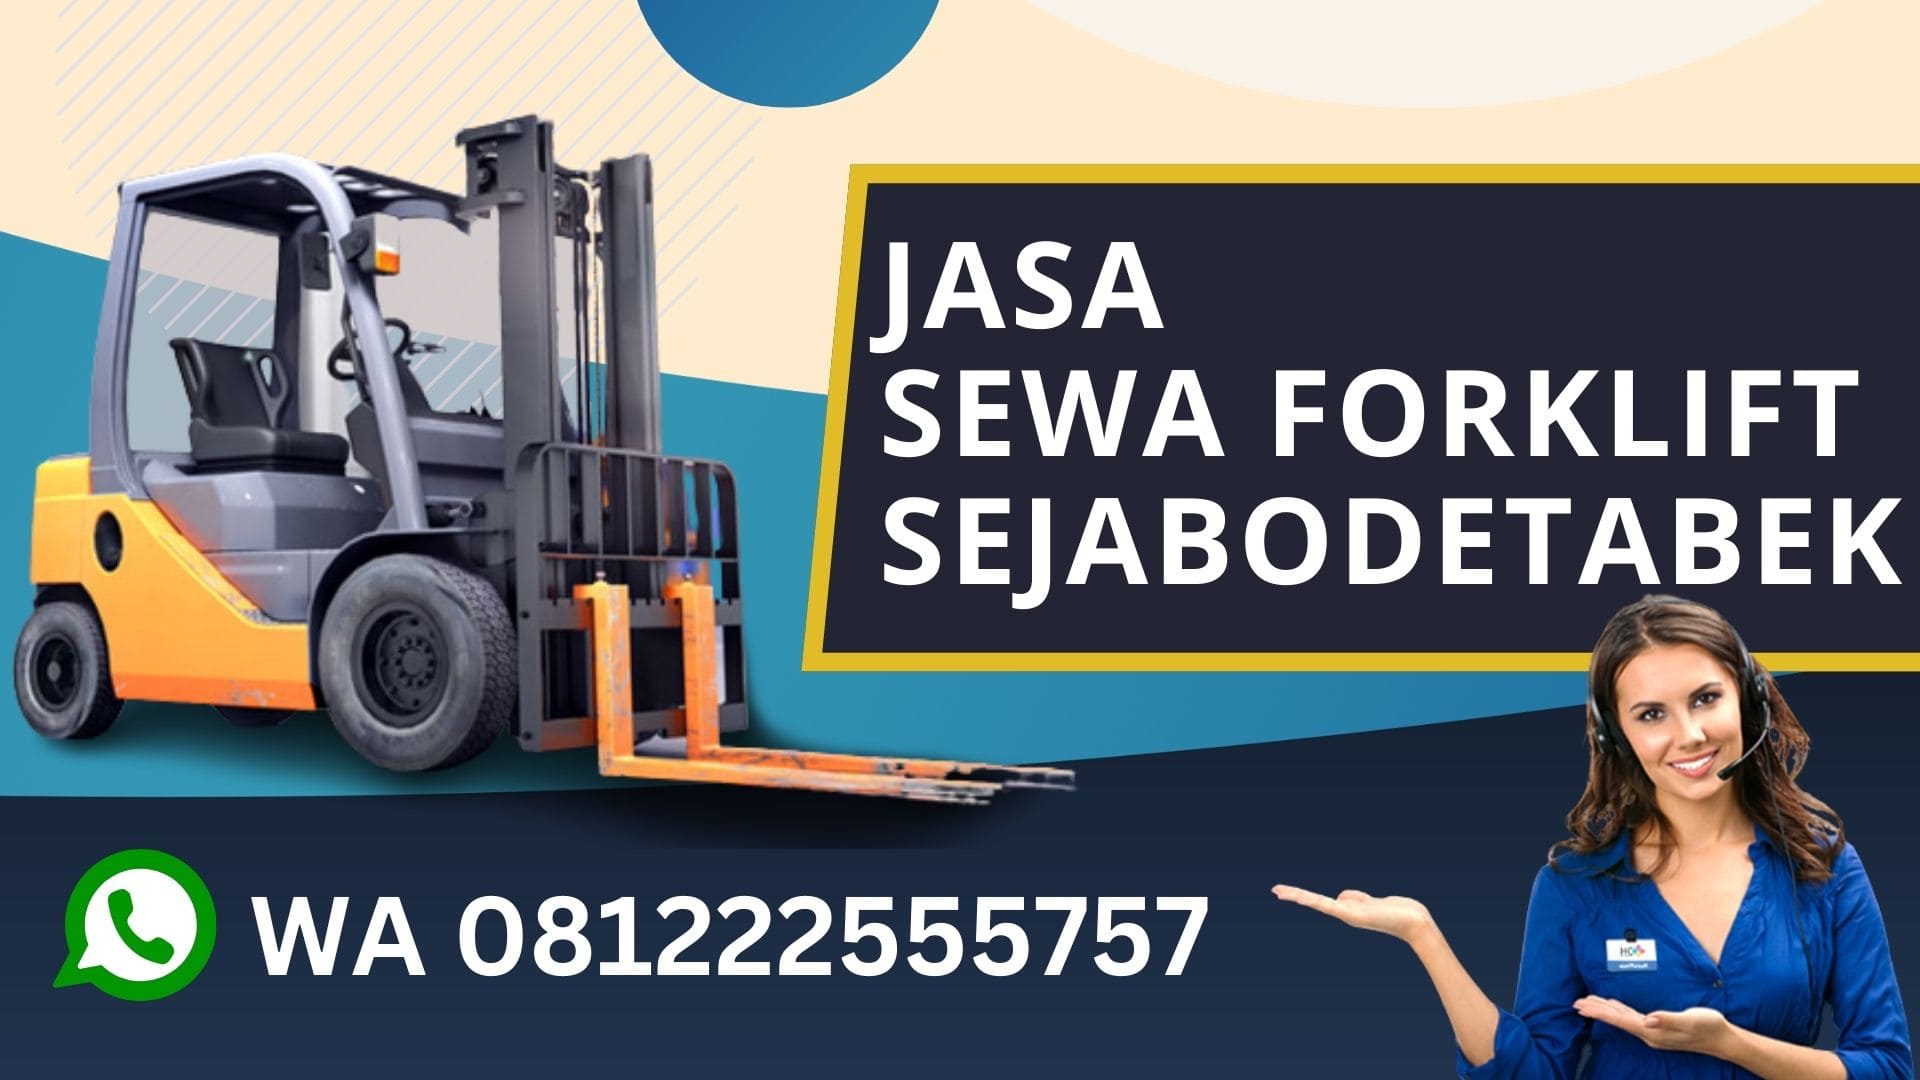 WA 081222555757 Sewa Forklift Penjaringan Jakarta Utara, Rental Forklift, biaya sewa forklift harian, rental forklift bulanan